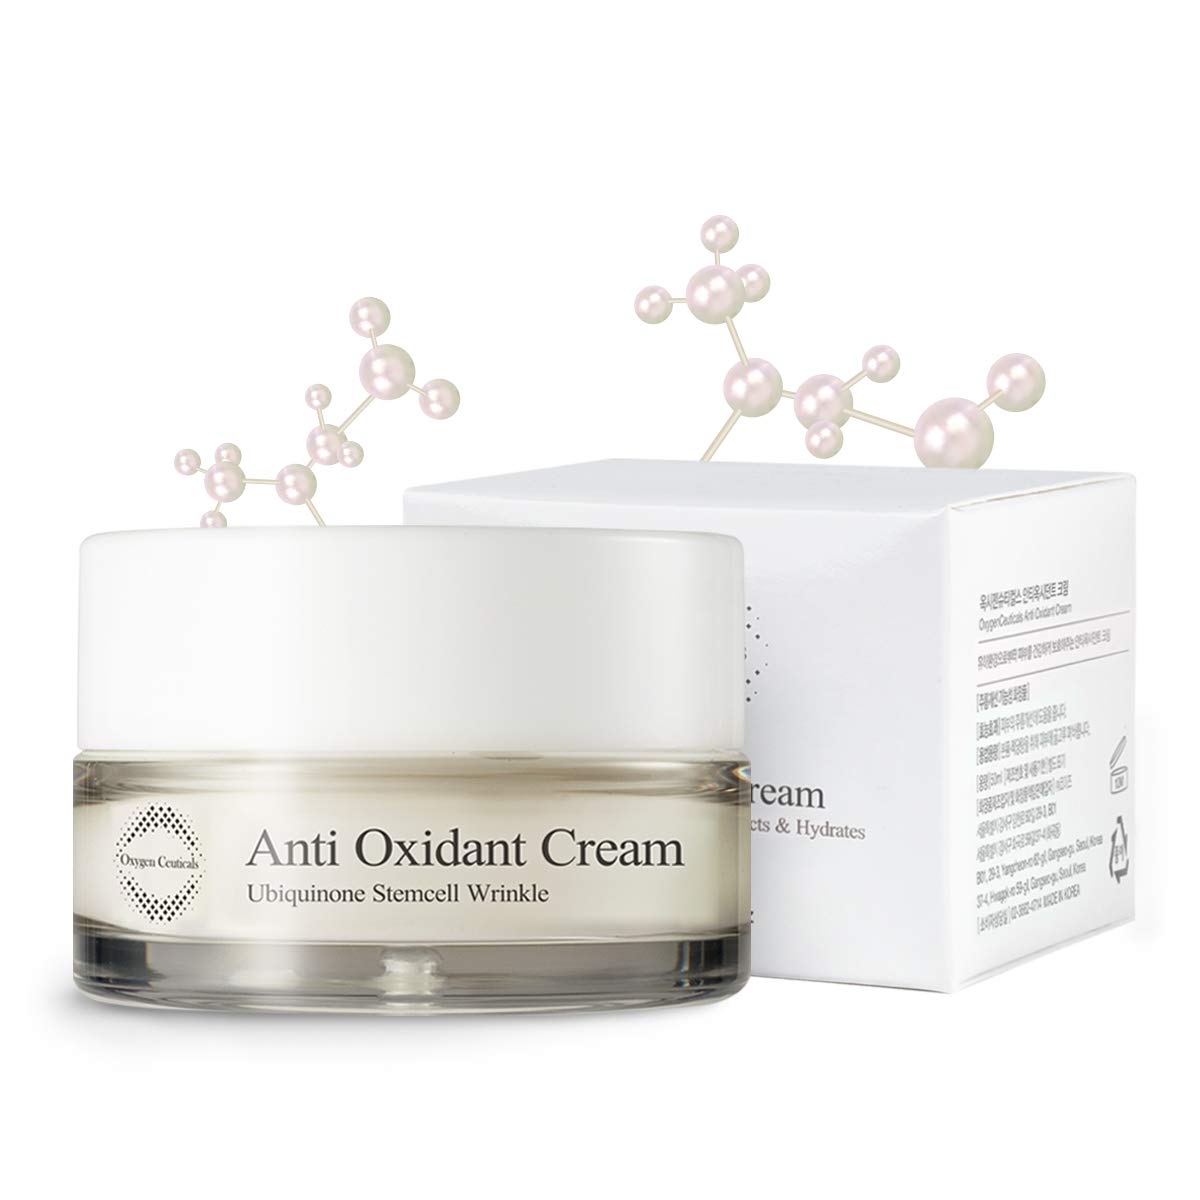  Anti Oxidant Cream